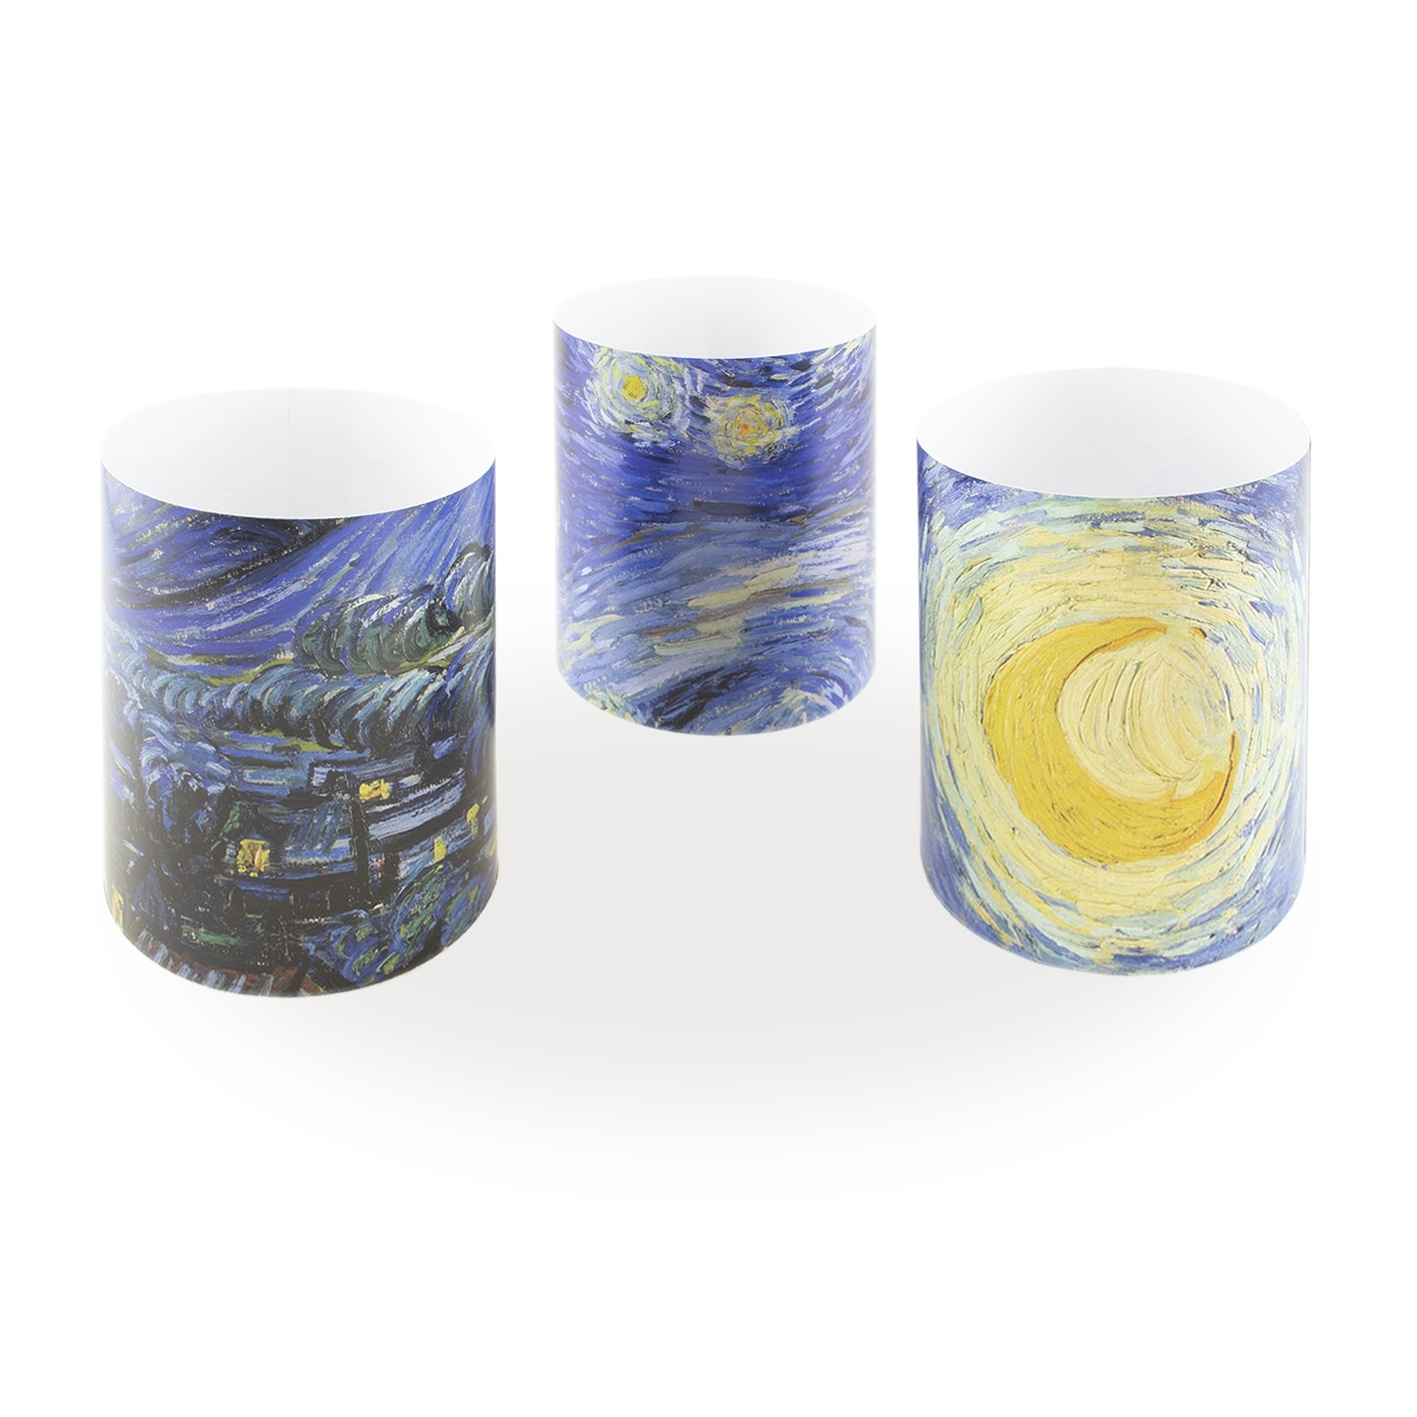 - 5.75 x 2 x 2 Inches Ceramic Tealight Parastone Van Gogh 1889 Starry Night 